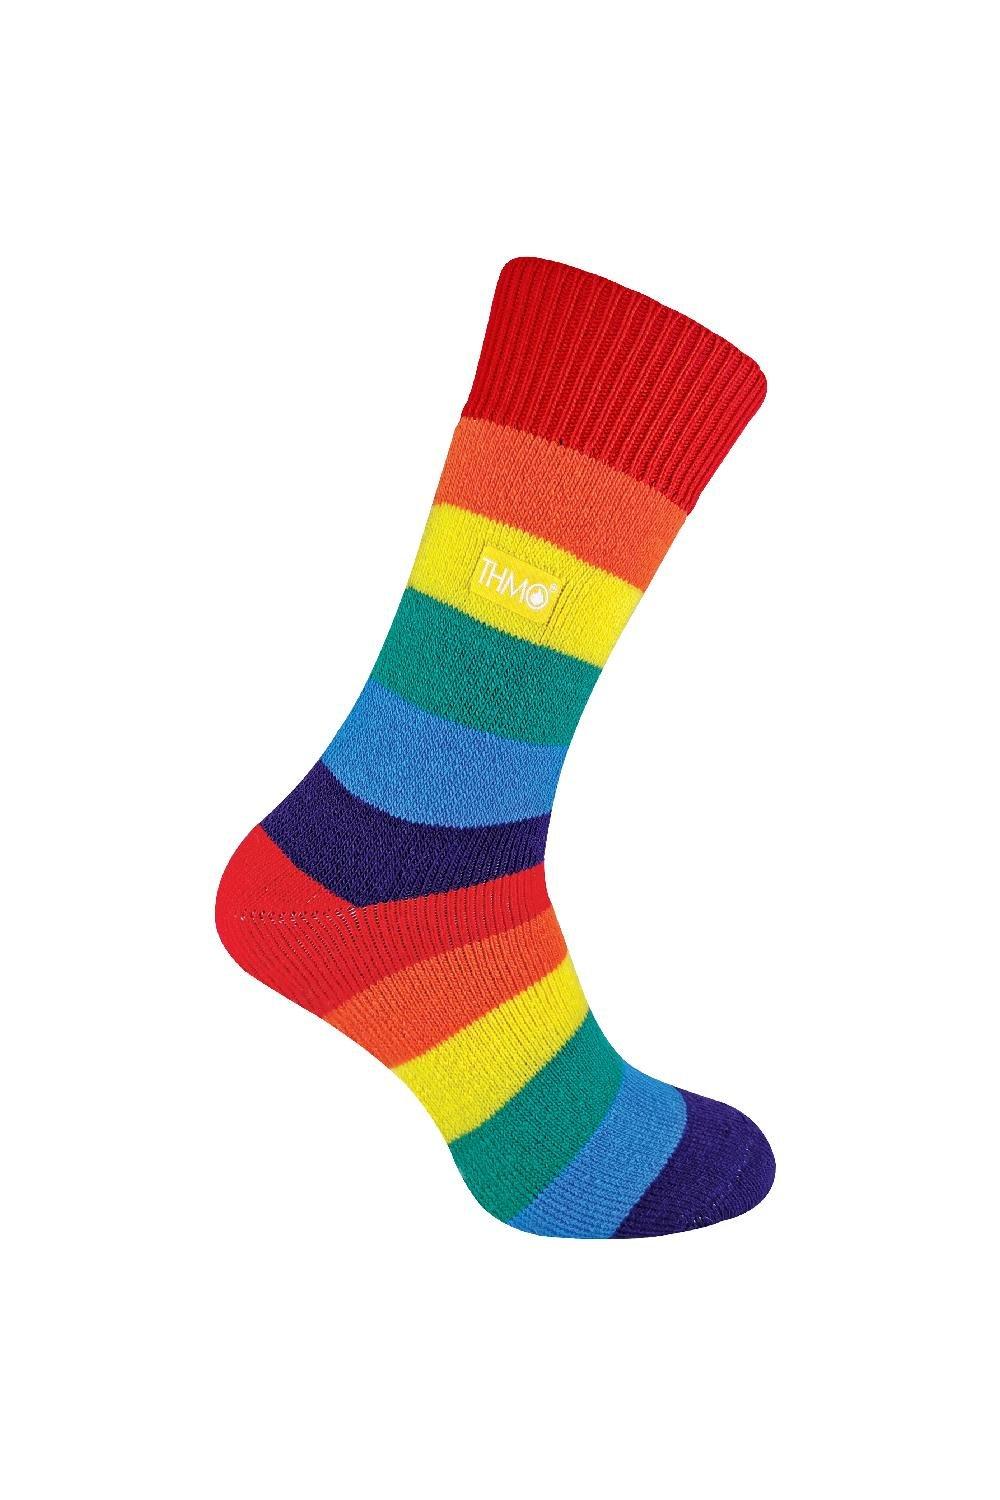 Extra Warm Thermal Rainbow Socks for Winter